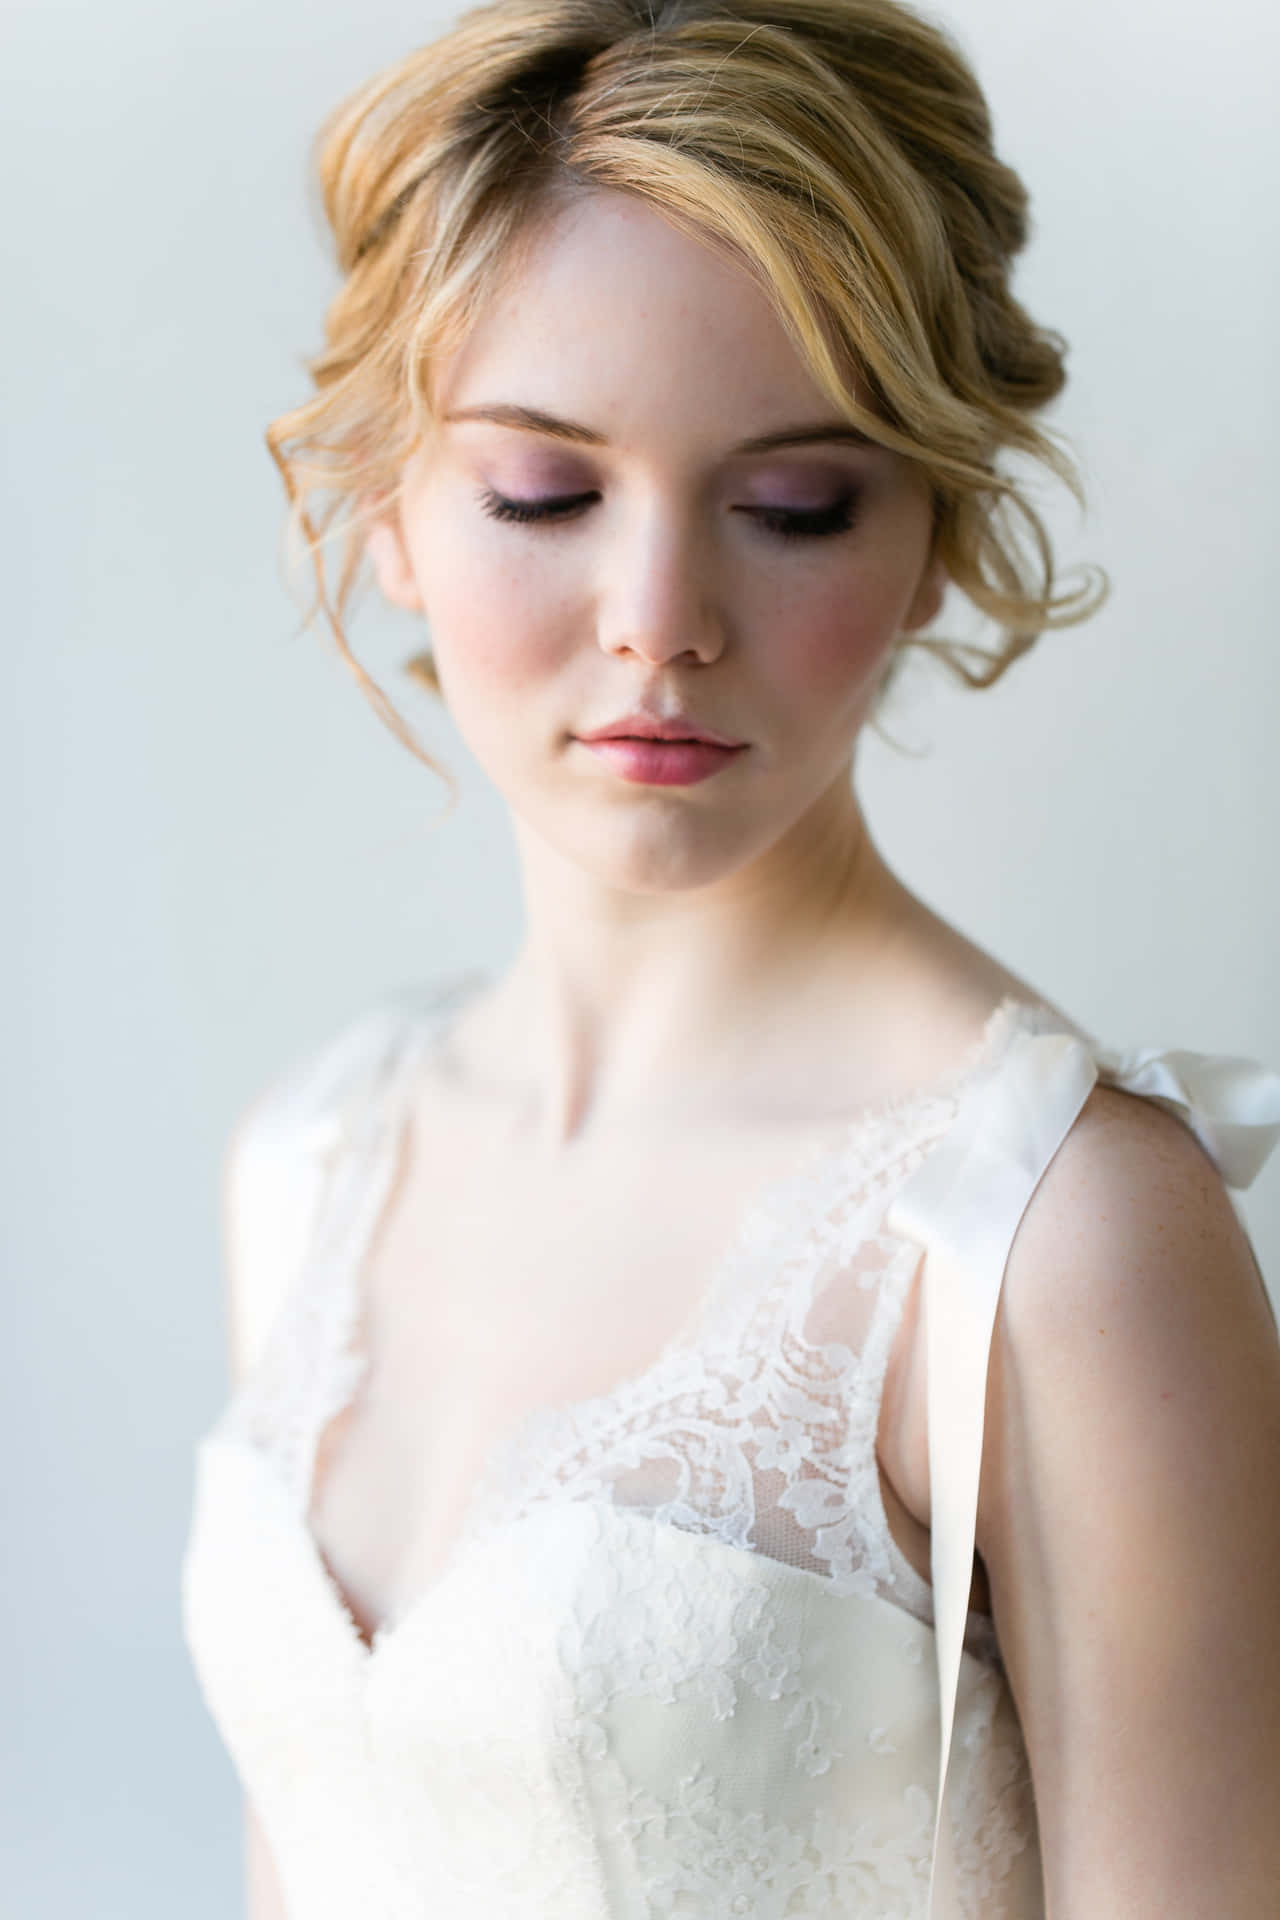 A Beautiful Bride In A White Wedding Dress